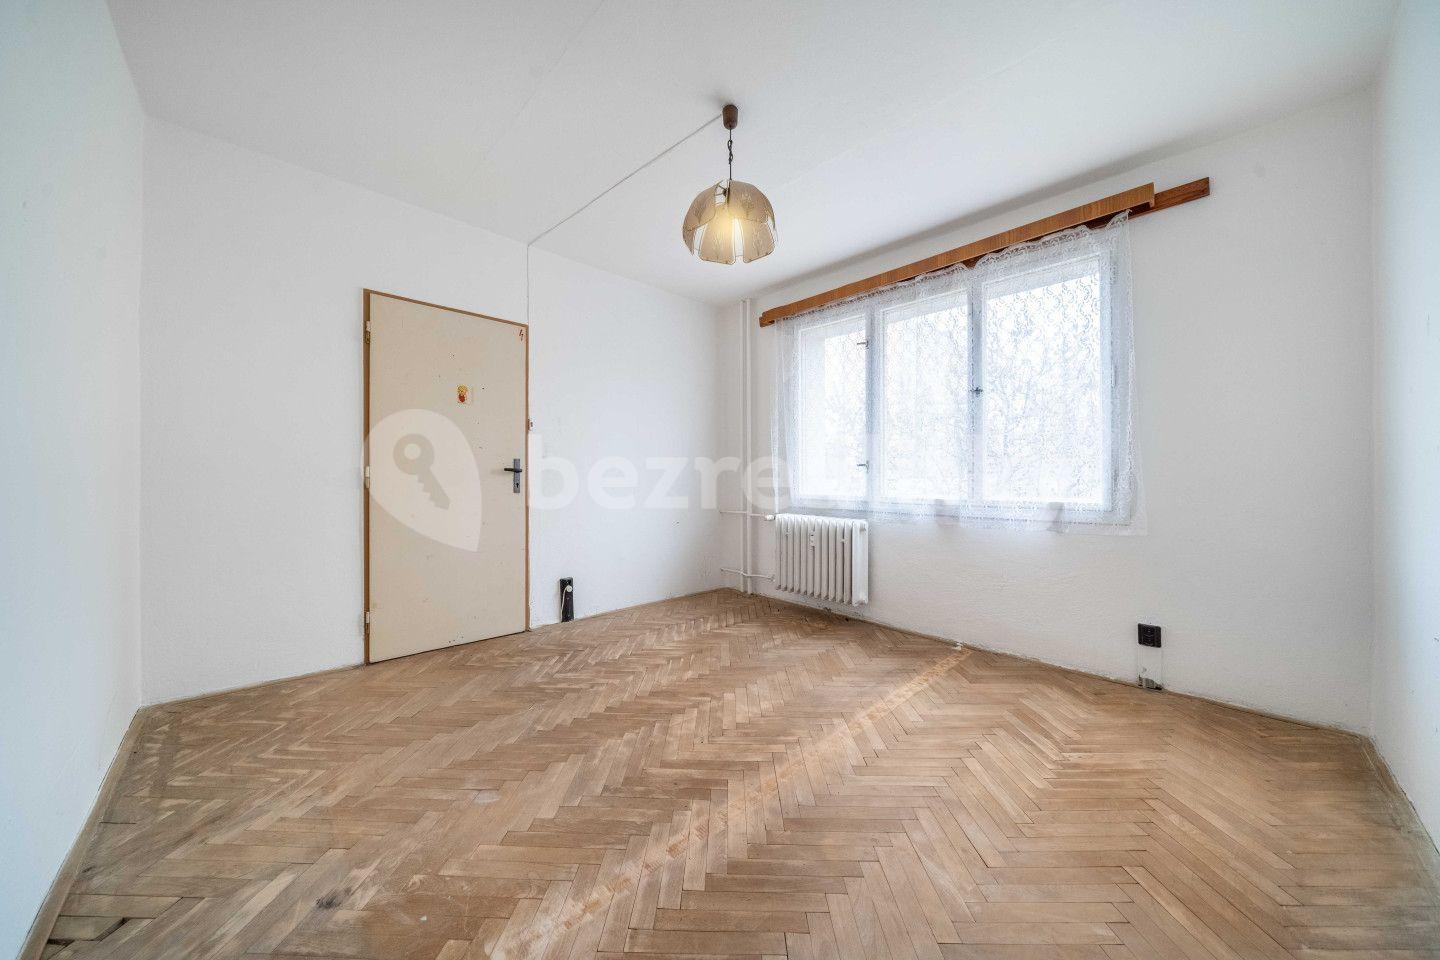 2 bedroom flat for sale, 54 m², Družby, Plzeň, Plzeňský Region